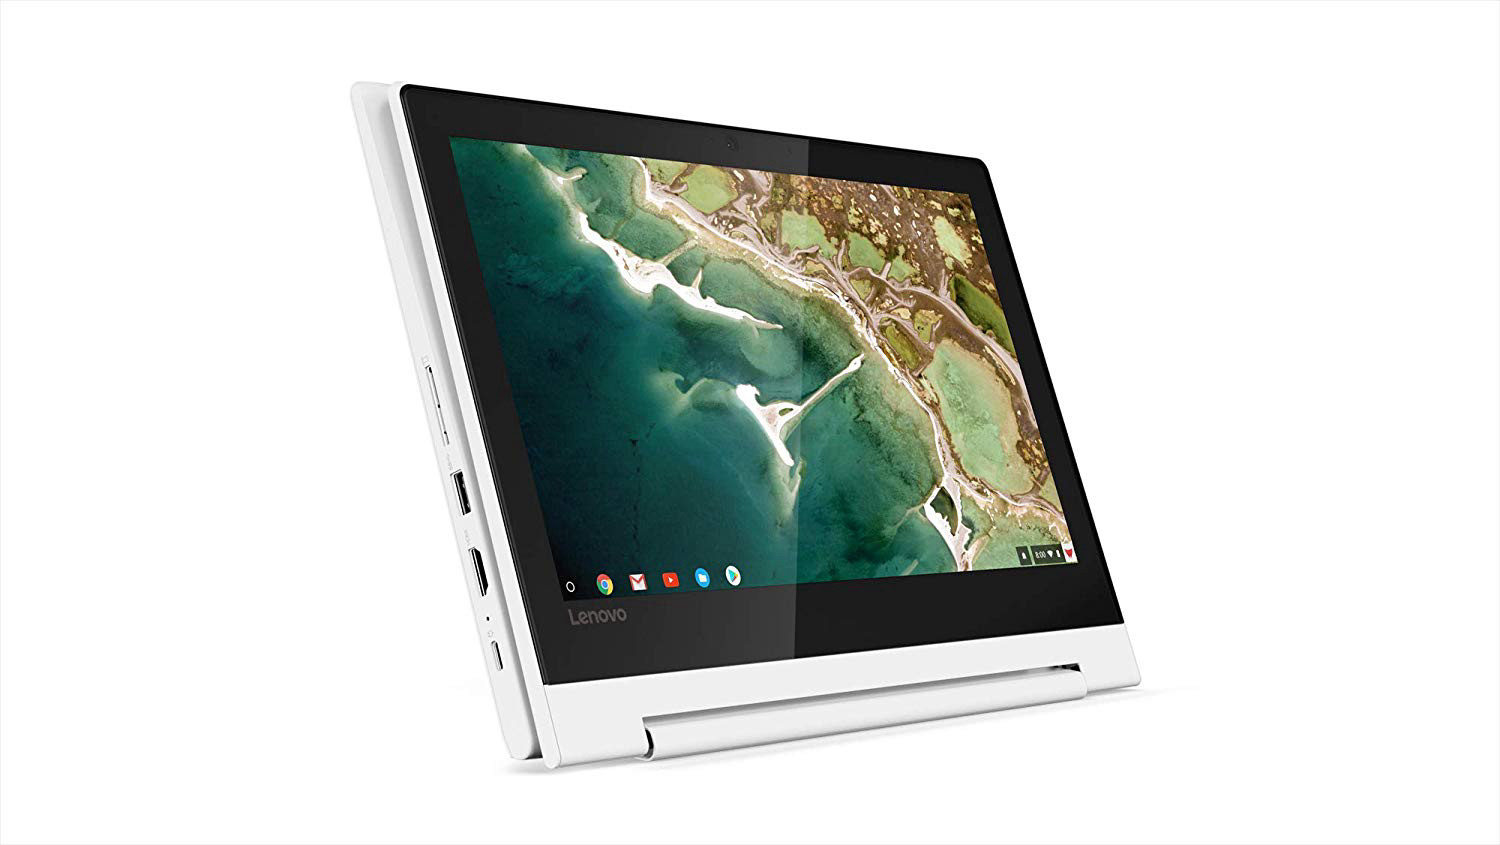 Lenovo Chromebook C330 2-in-1 Convertible Laptop, 11.6-Inch HD (1366 x 768) IPS Display, MediaTek MT8173C Processor, 4GB LPDDR3, 64 GB eMMC, Chrome OS, 81HY0000US, Blizzard White